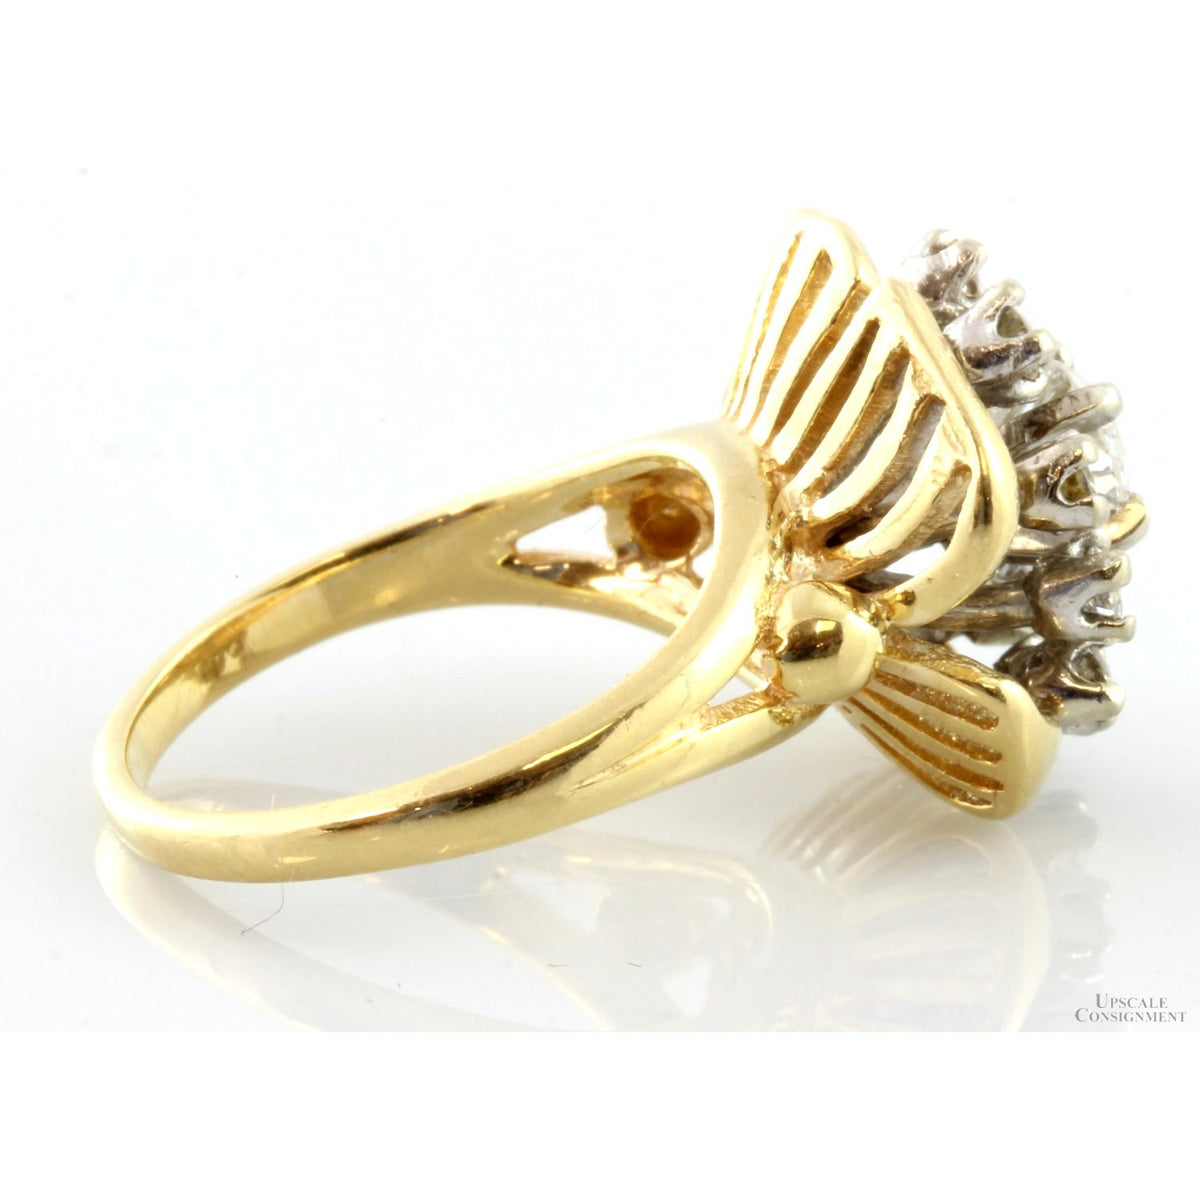 .74ctw Diamond Halo Flower Setting 14K Yellow Gold Ring